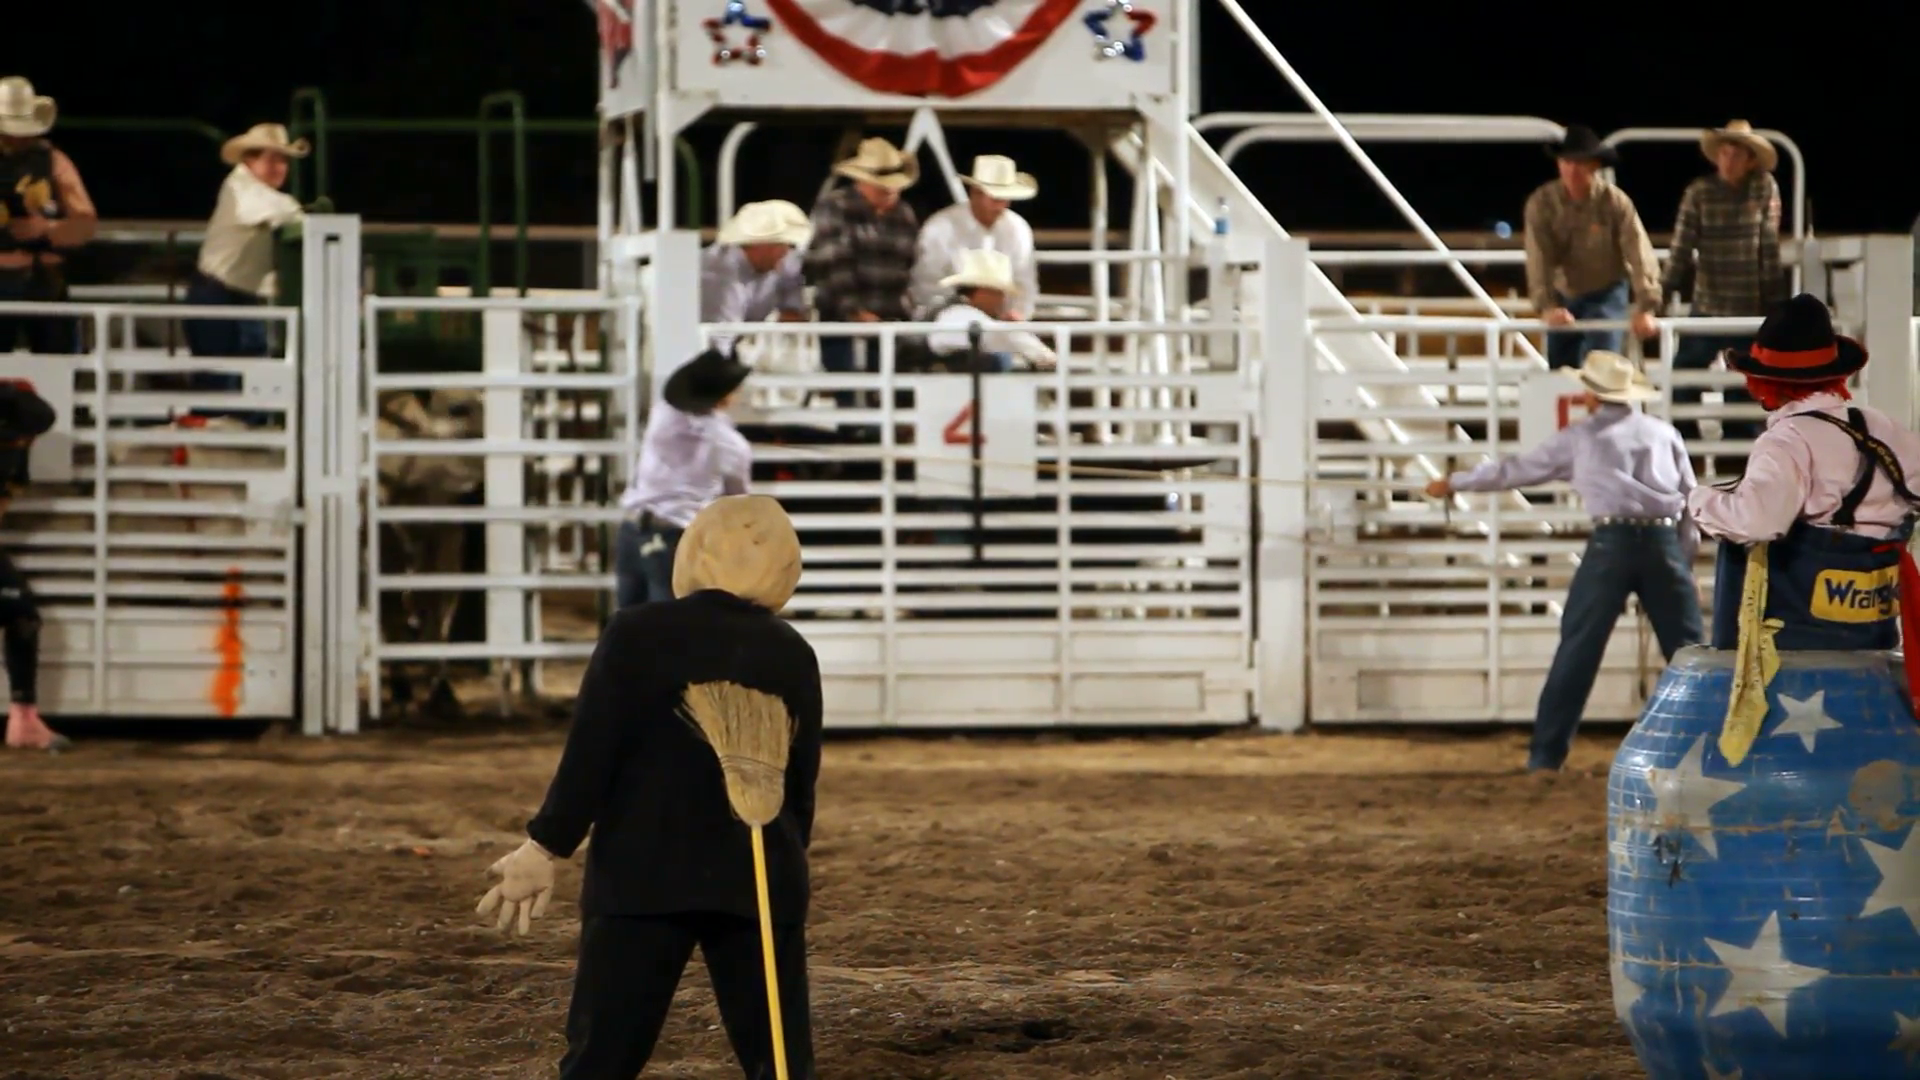 Rodeo Cowboy Bucking bull Bul